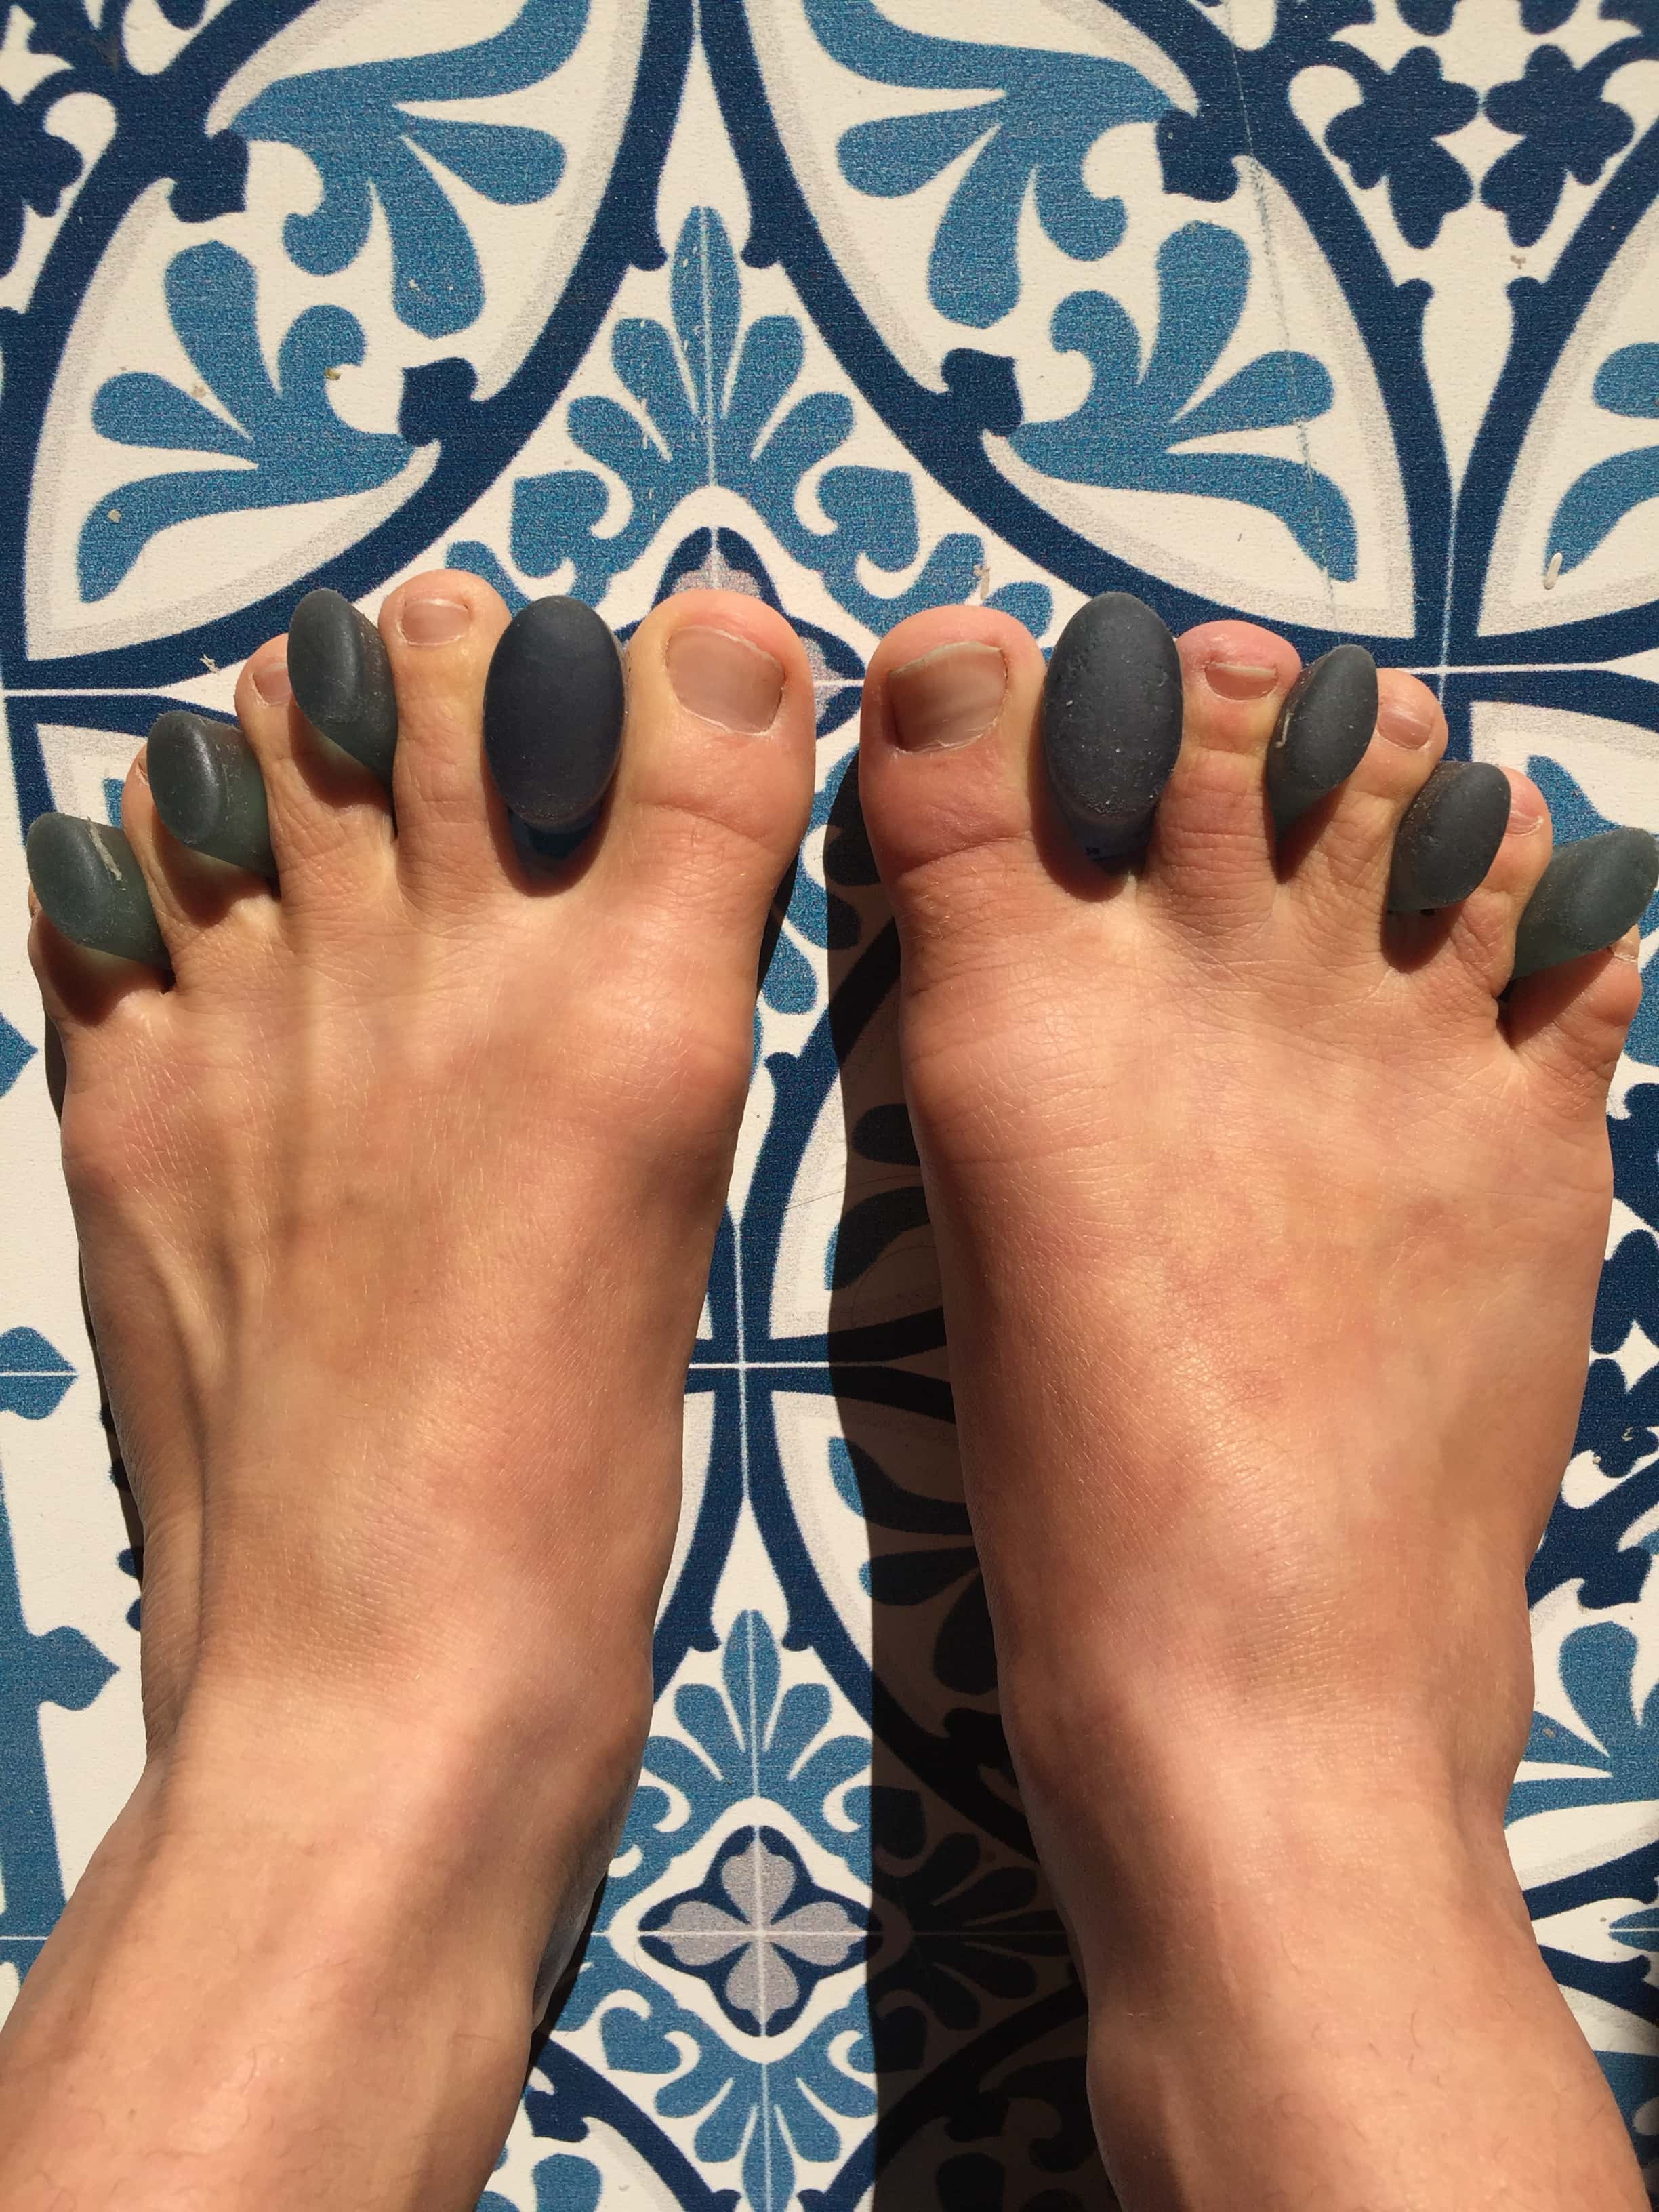 toe spreaders feet bunions foot pain plantar fasciitis joya toes